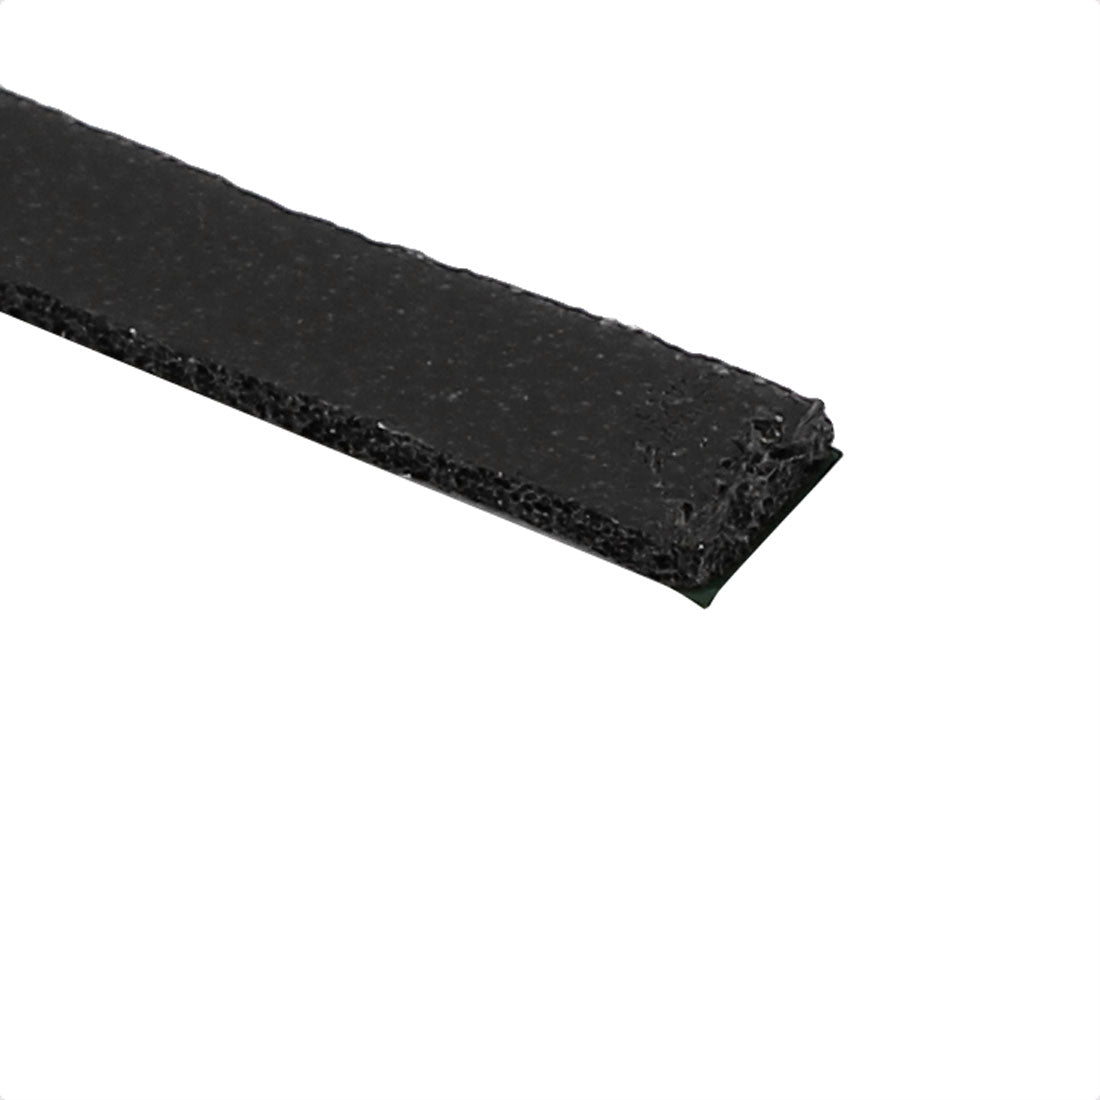 uxcell Uxcell 2pcs 5mm x 1mm Black Dual Sided Self Adhesive Sponge Foam Tape 10M Length